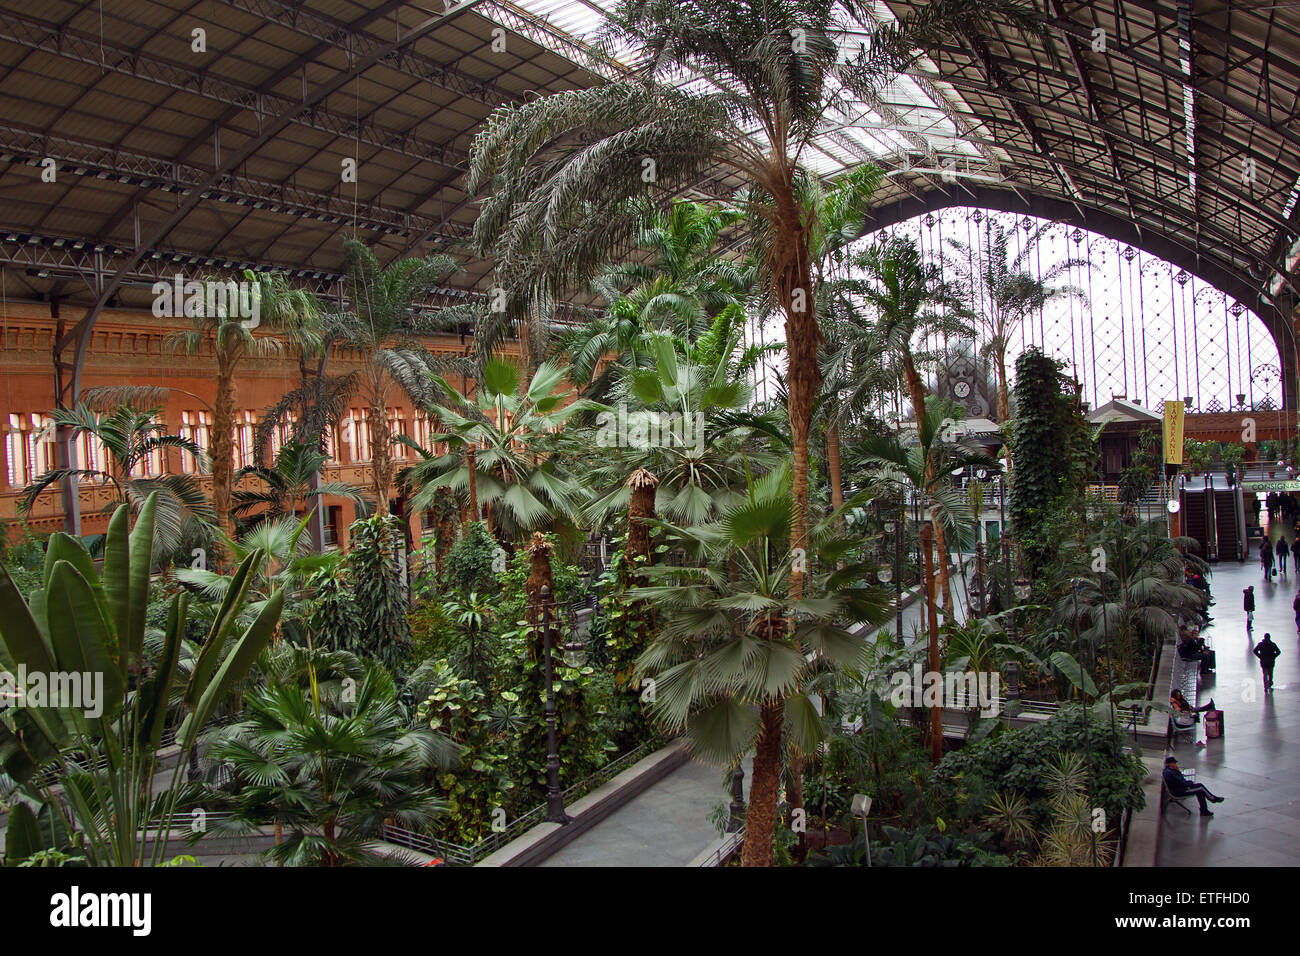 The Atocha Train Station. A view of the atrium of the Atocha Rail Station, Madrid, Spain. Stock Photo